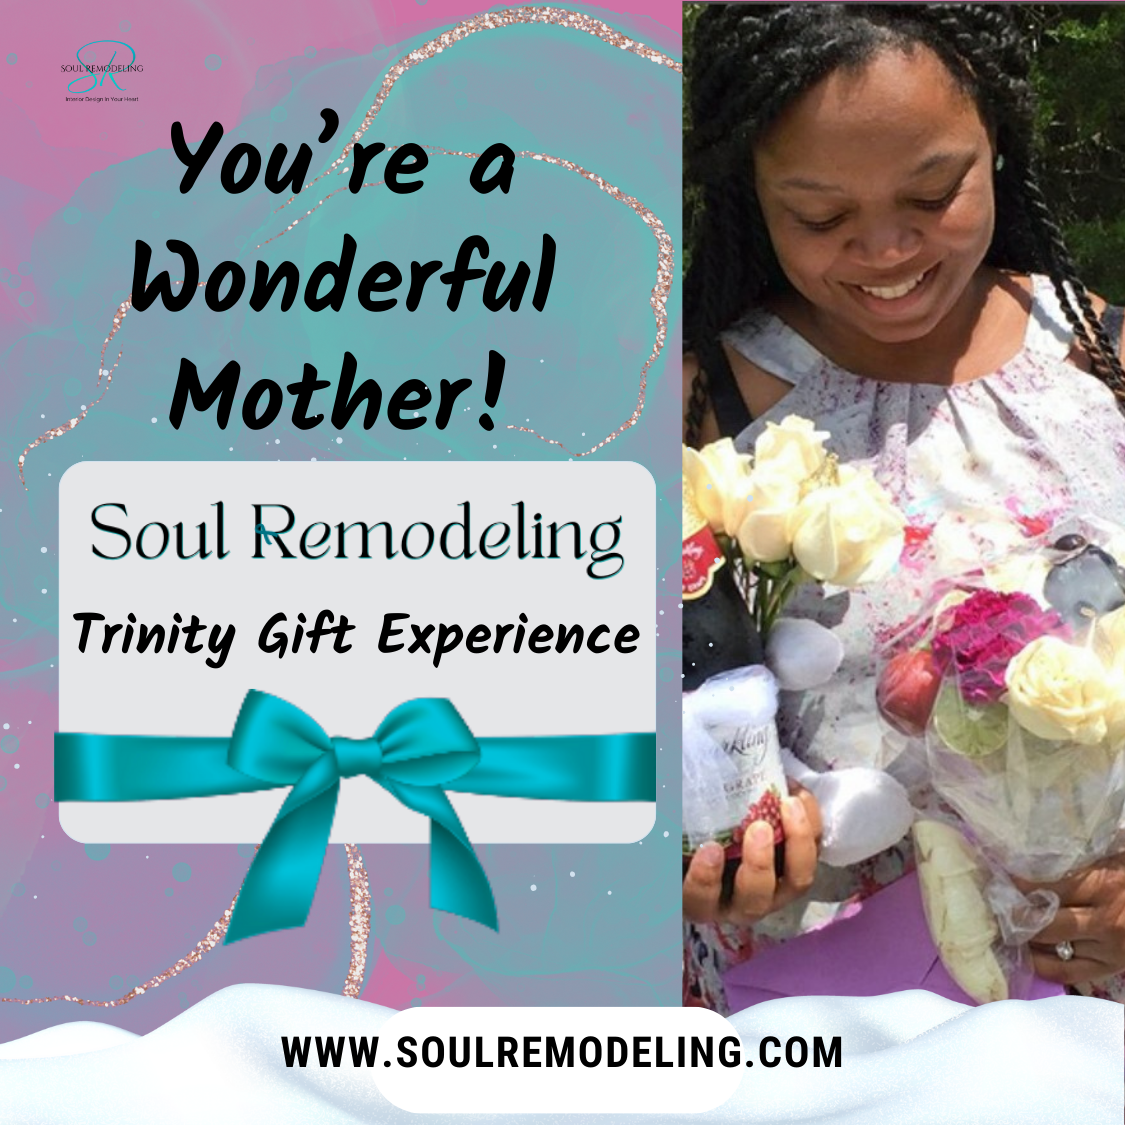 Soul Remodeling Gift Card